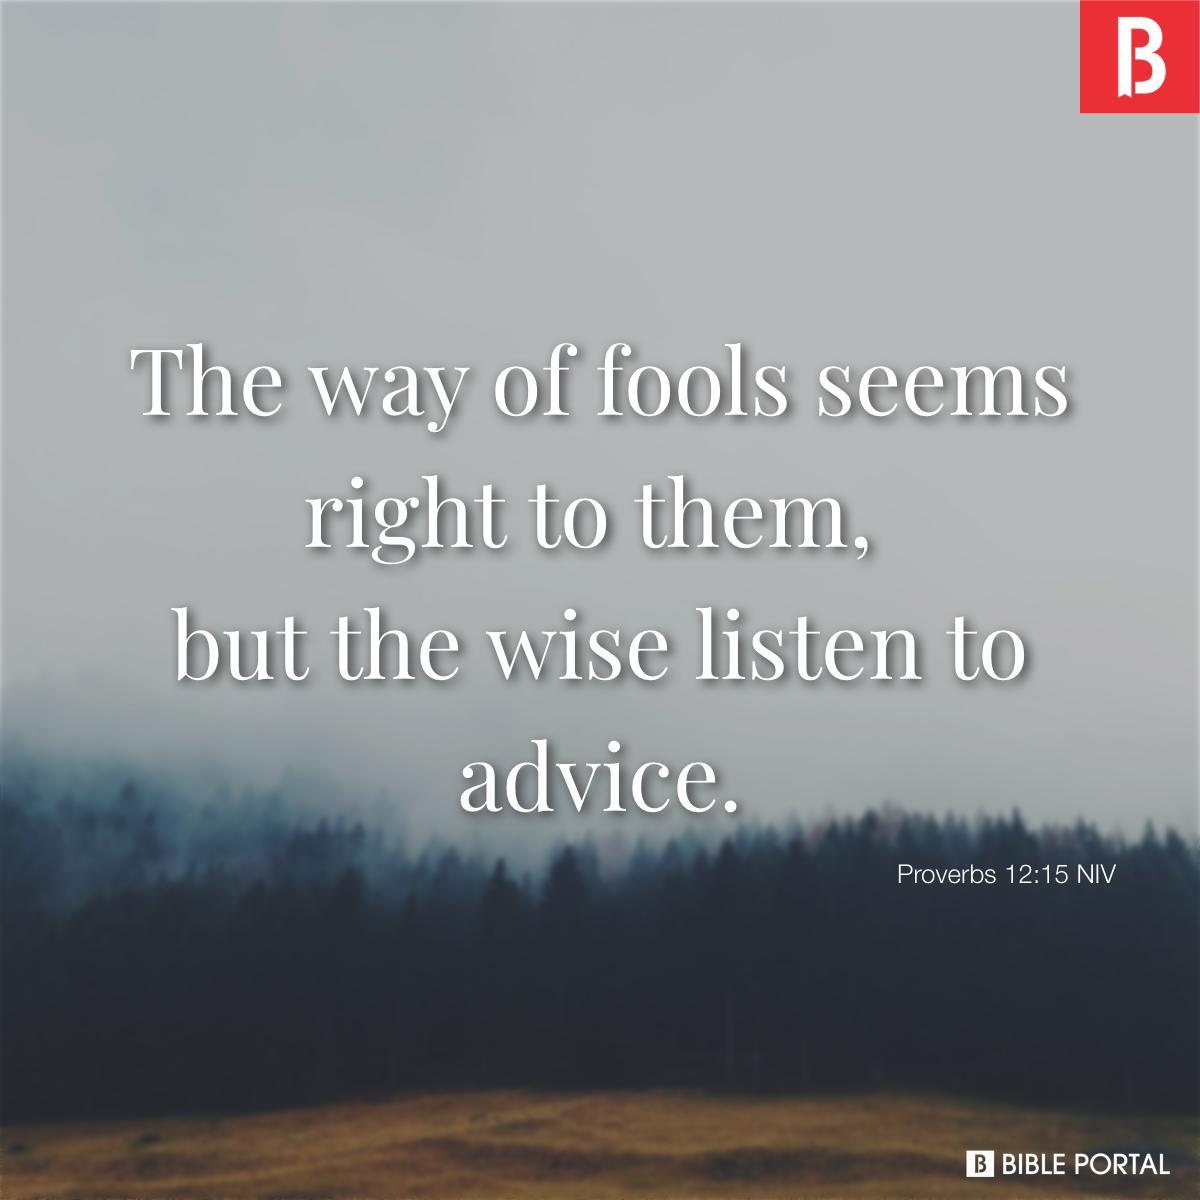 Proverbs 12:15 NIV